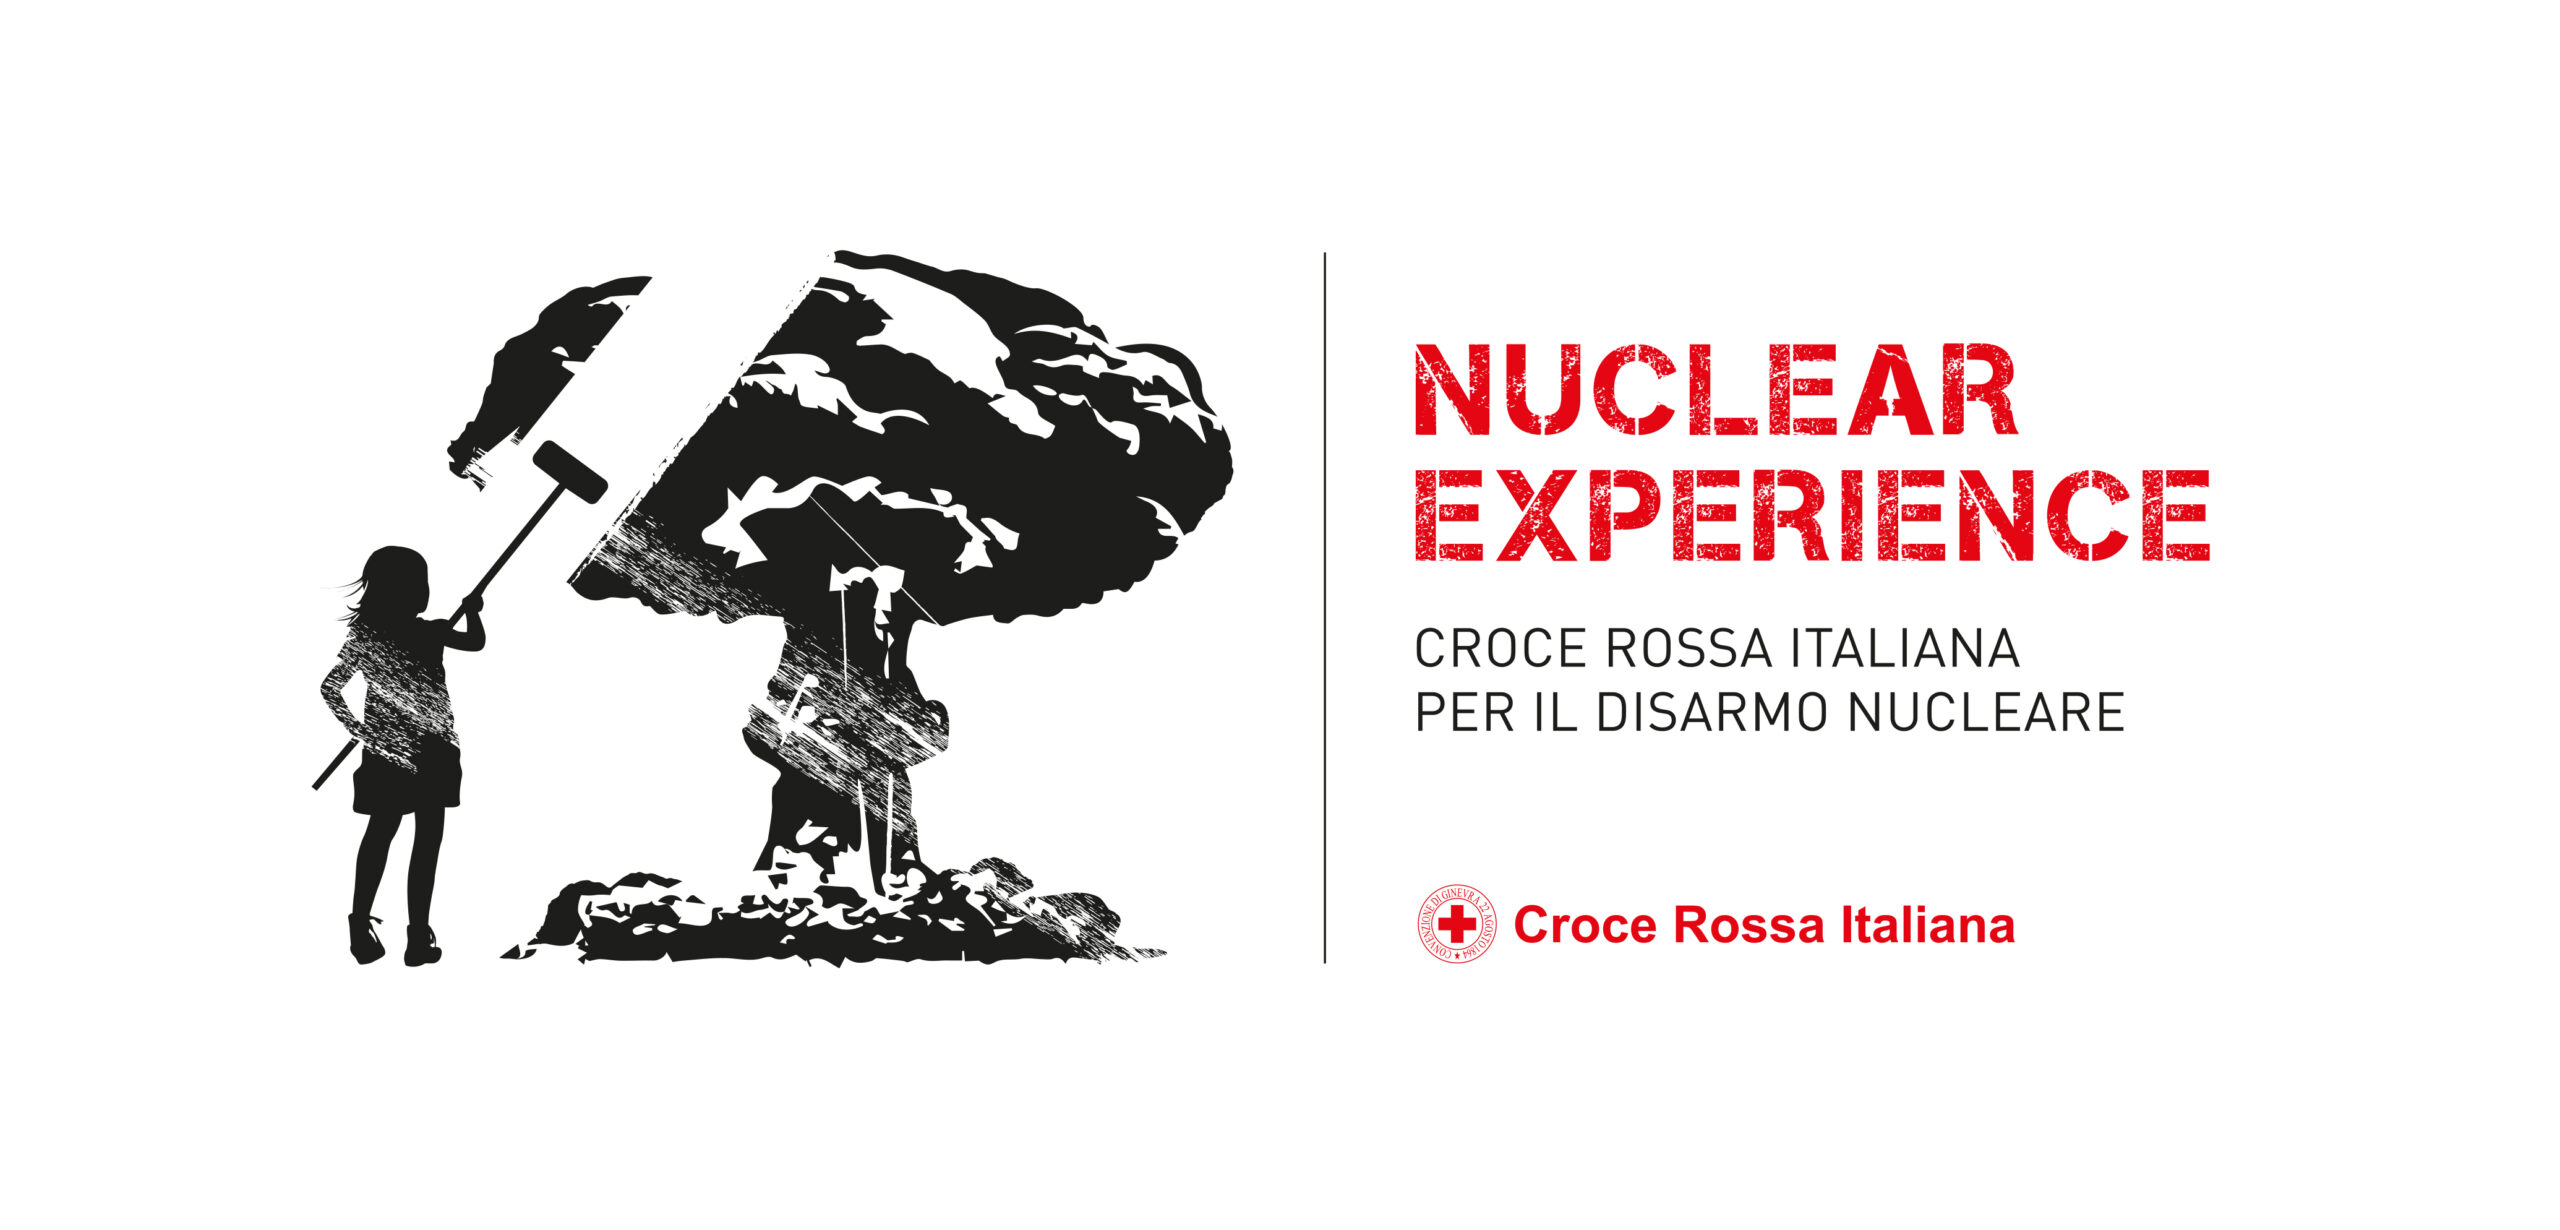 Croce_Rossa_Italiana_logo_nuclear_experience